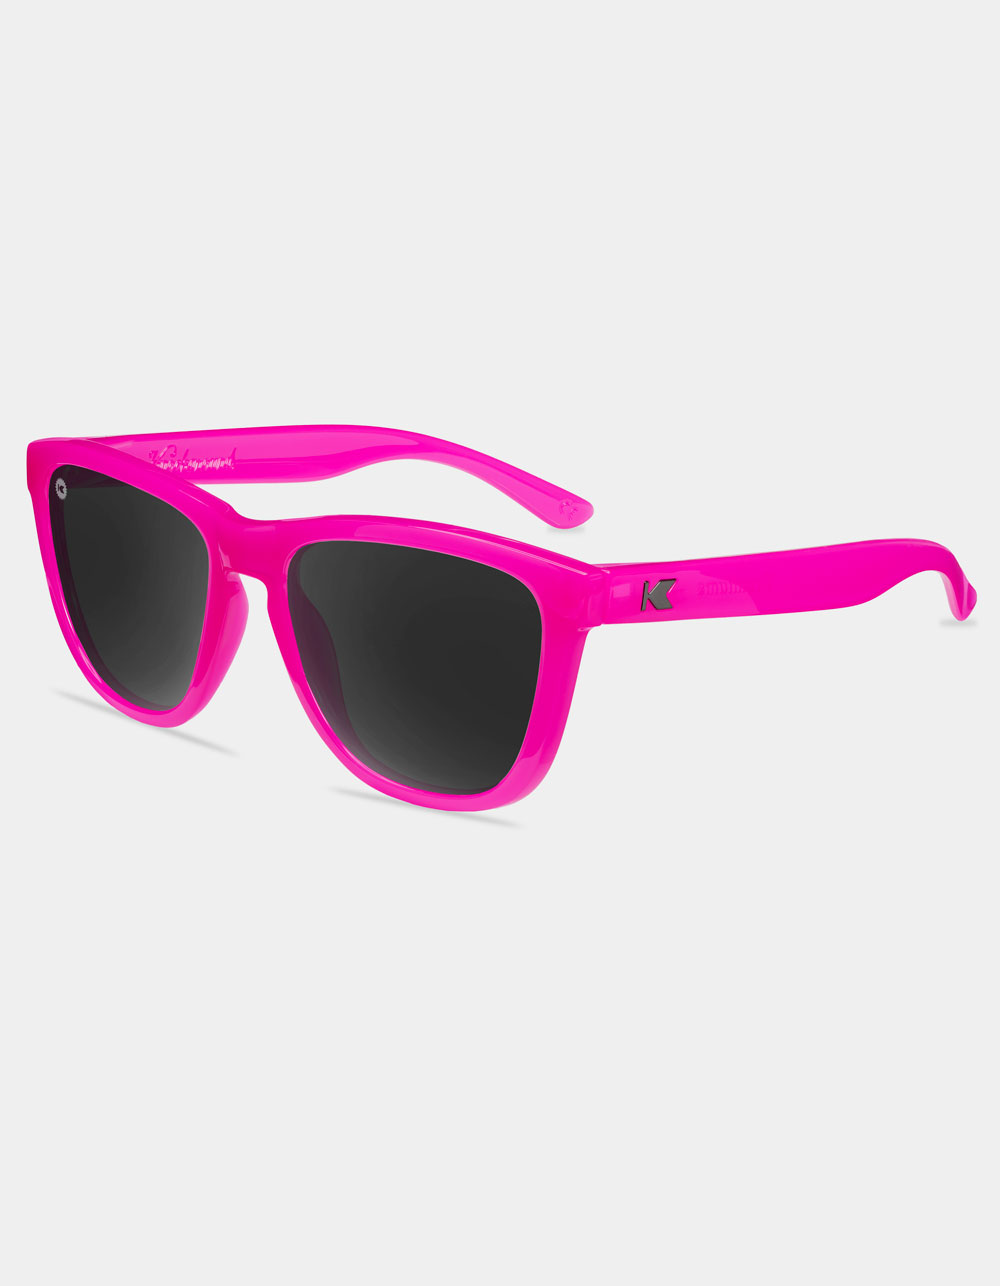 KNOCKAROUND Premiums Malibu Pink Polarized Sunglasses